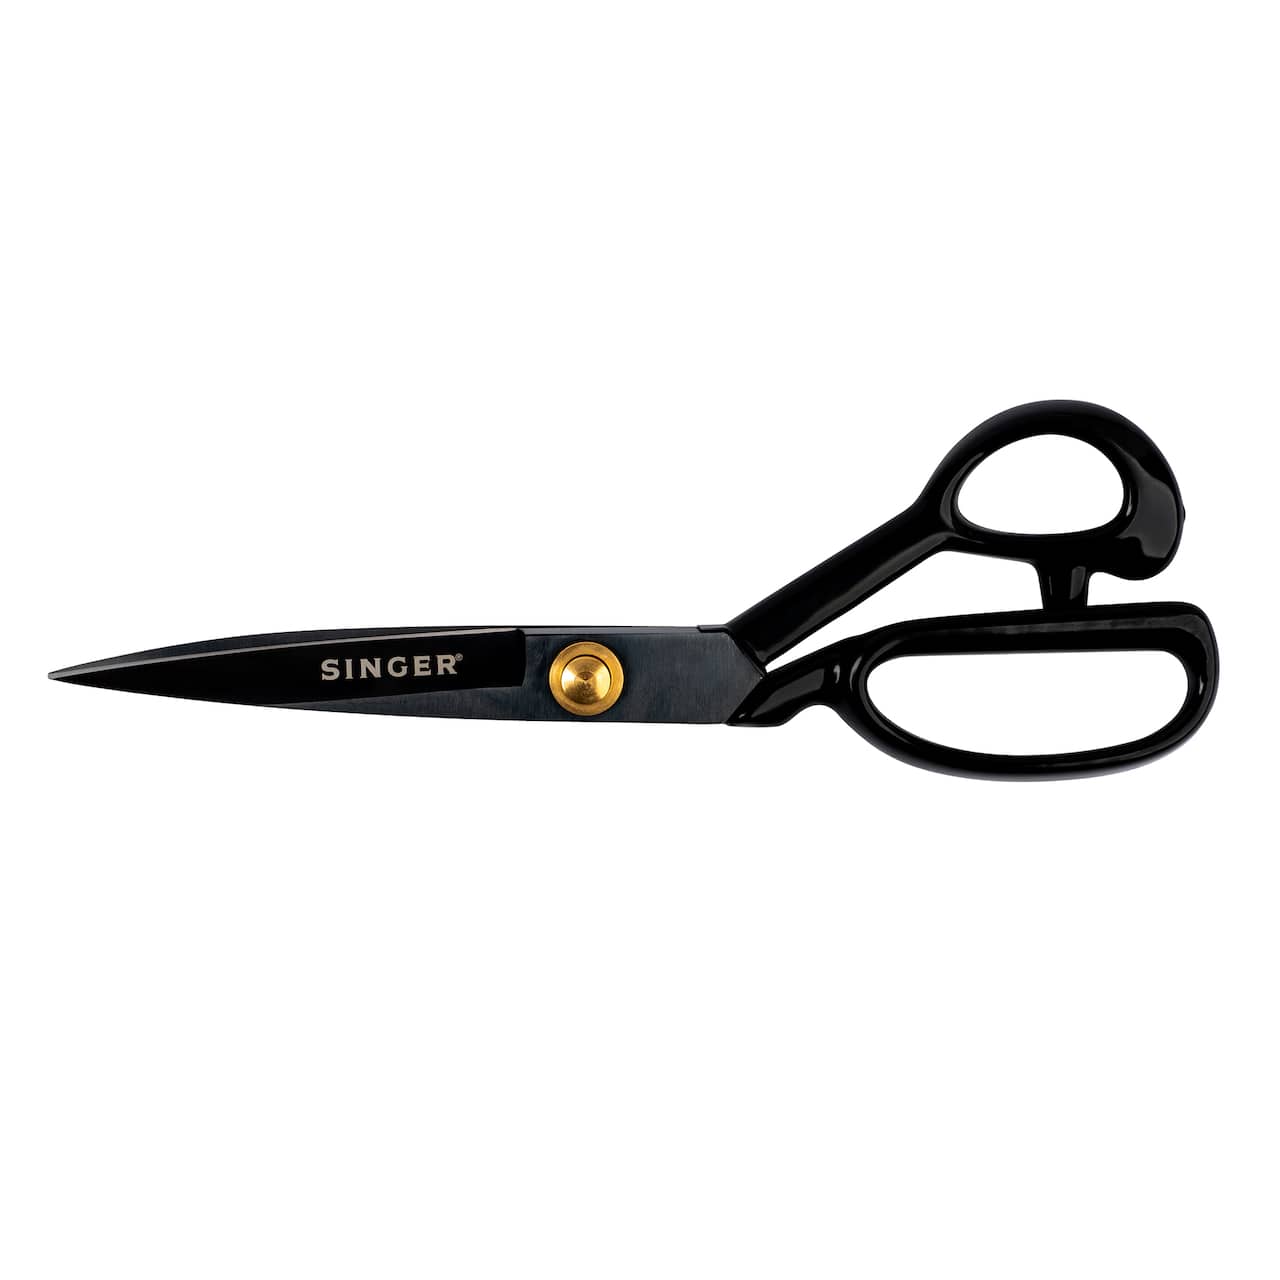 SINGER® ProSeries™ 10 Tailor Scissors with Black Oxide Finish